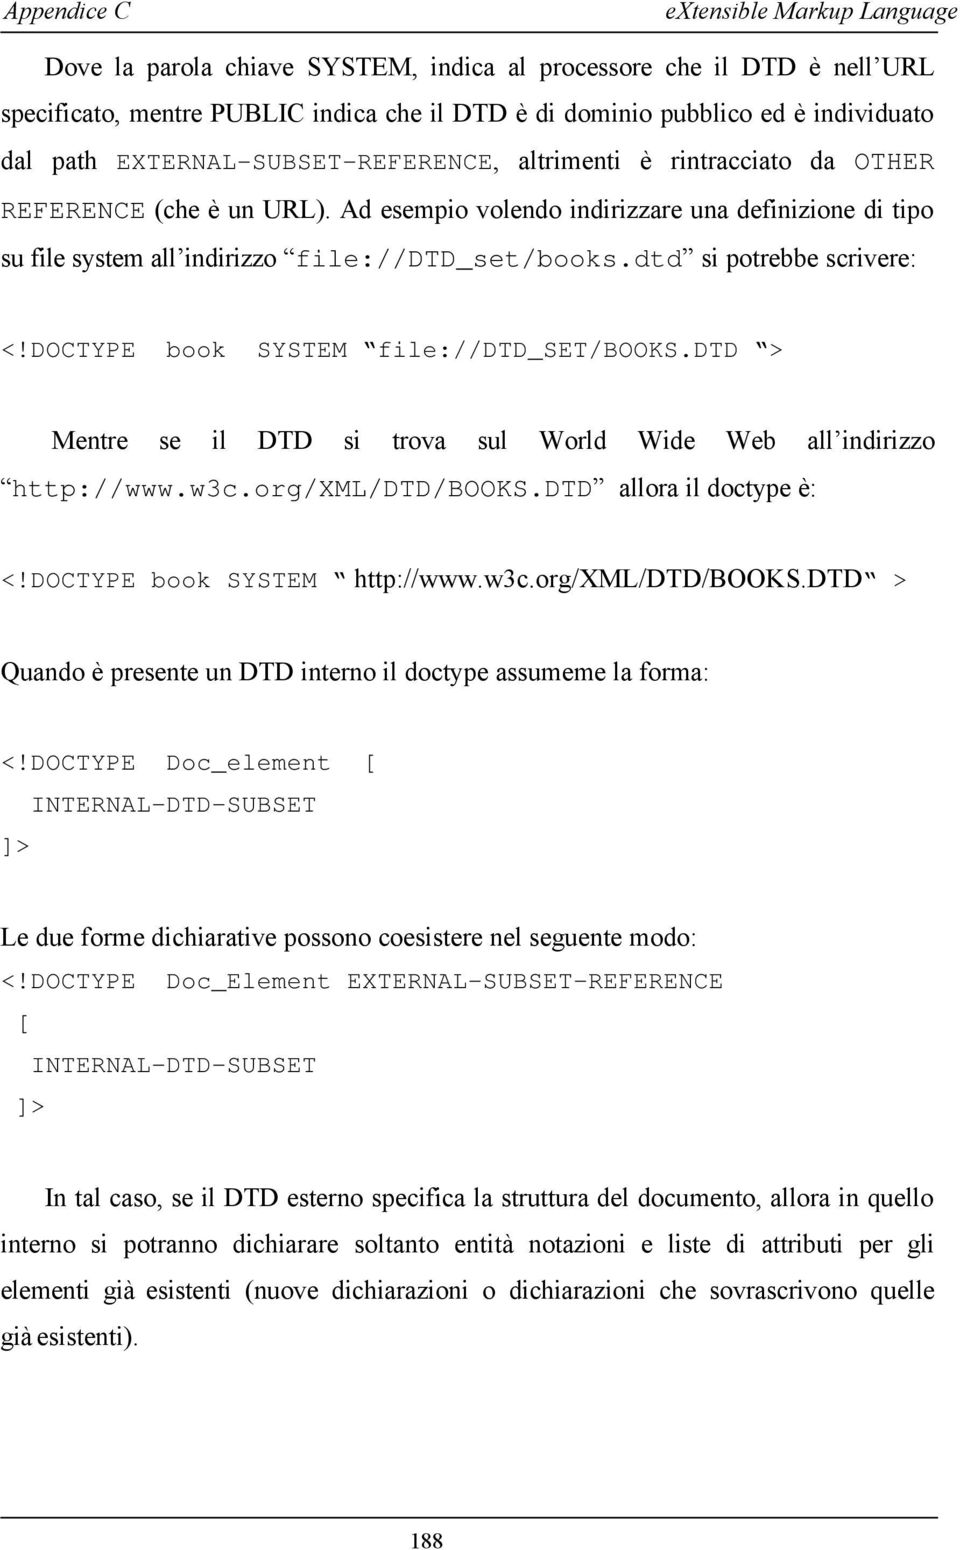 DOCTYPE book SYSTEM file://dtd_set/books.dtd > Mentre se il DTD si trova sul World Wide Web all indirizzo http://www.w3c.org/xml/dtd/books.dtd allora il doctype è: <!DOCTYPE book SYSTEM http://www.